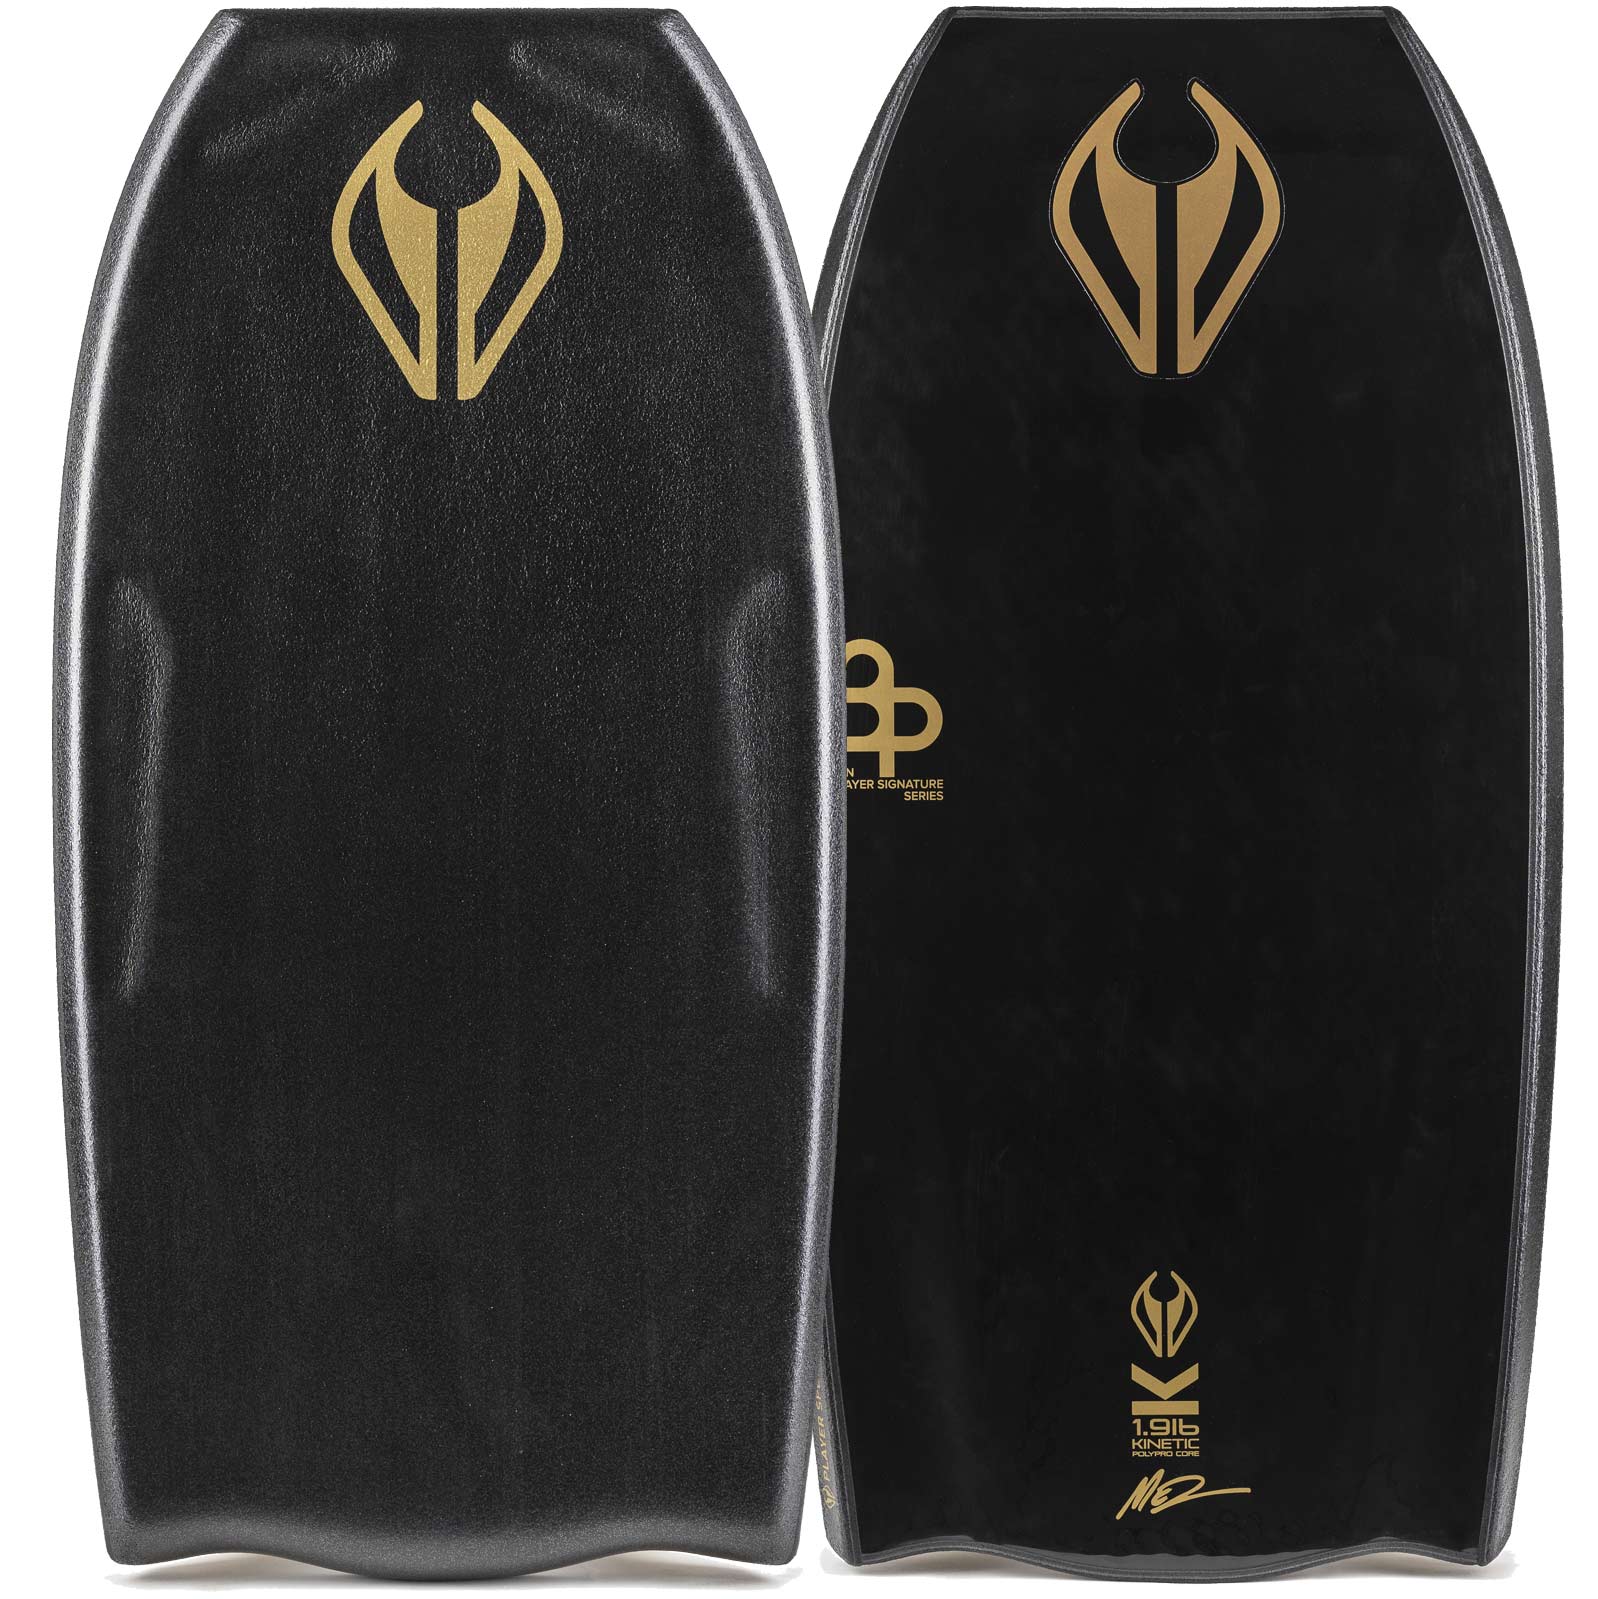 Bodyboard NMD Player Spec Bat Tail Black – Black antes $249.600